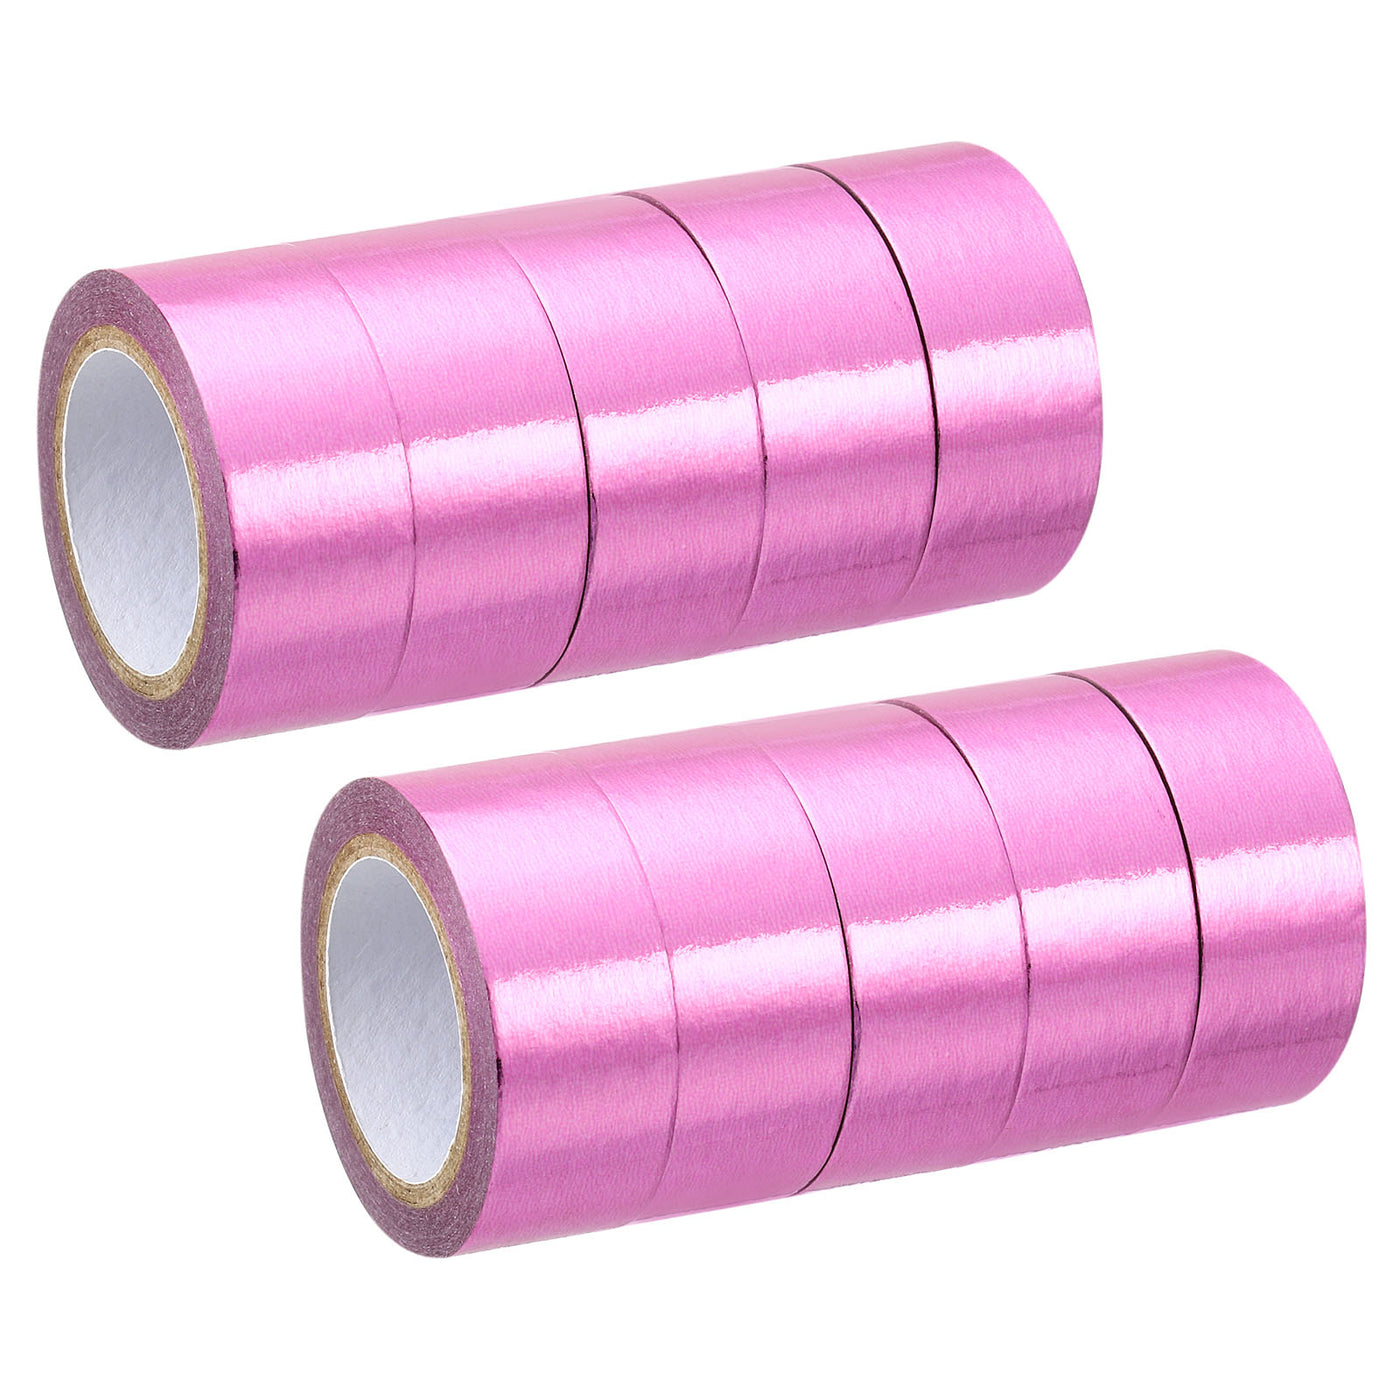 Harfington Metallic Washi Tape 15mm x 5m, 10 Pack Art Paper Tapes Washi Self-Adhesive Pink